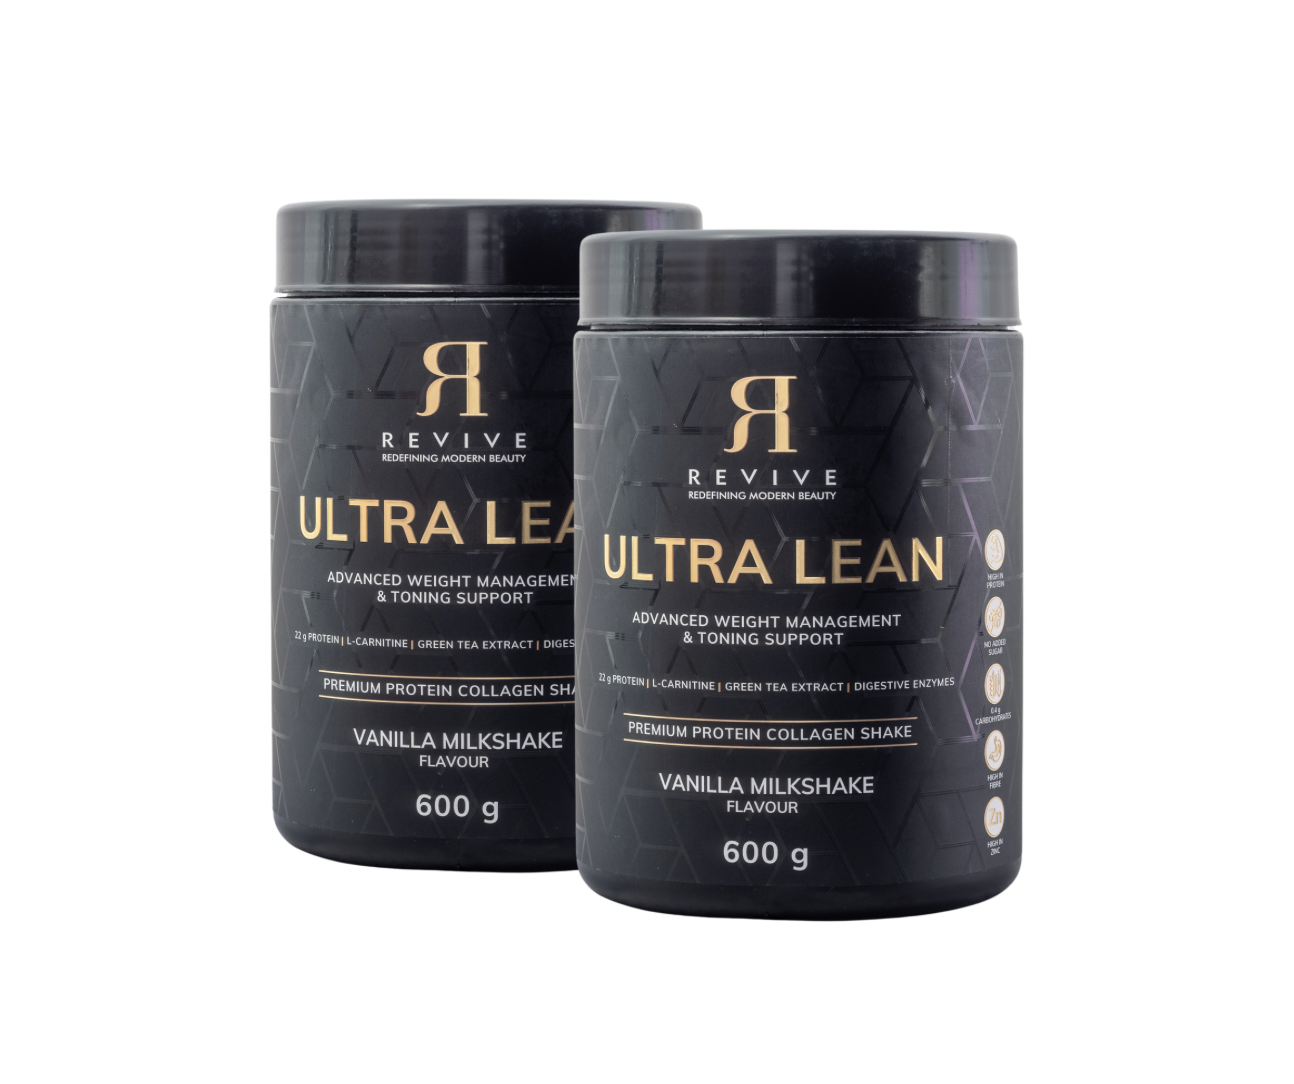 Ultra Lean Duo Delight